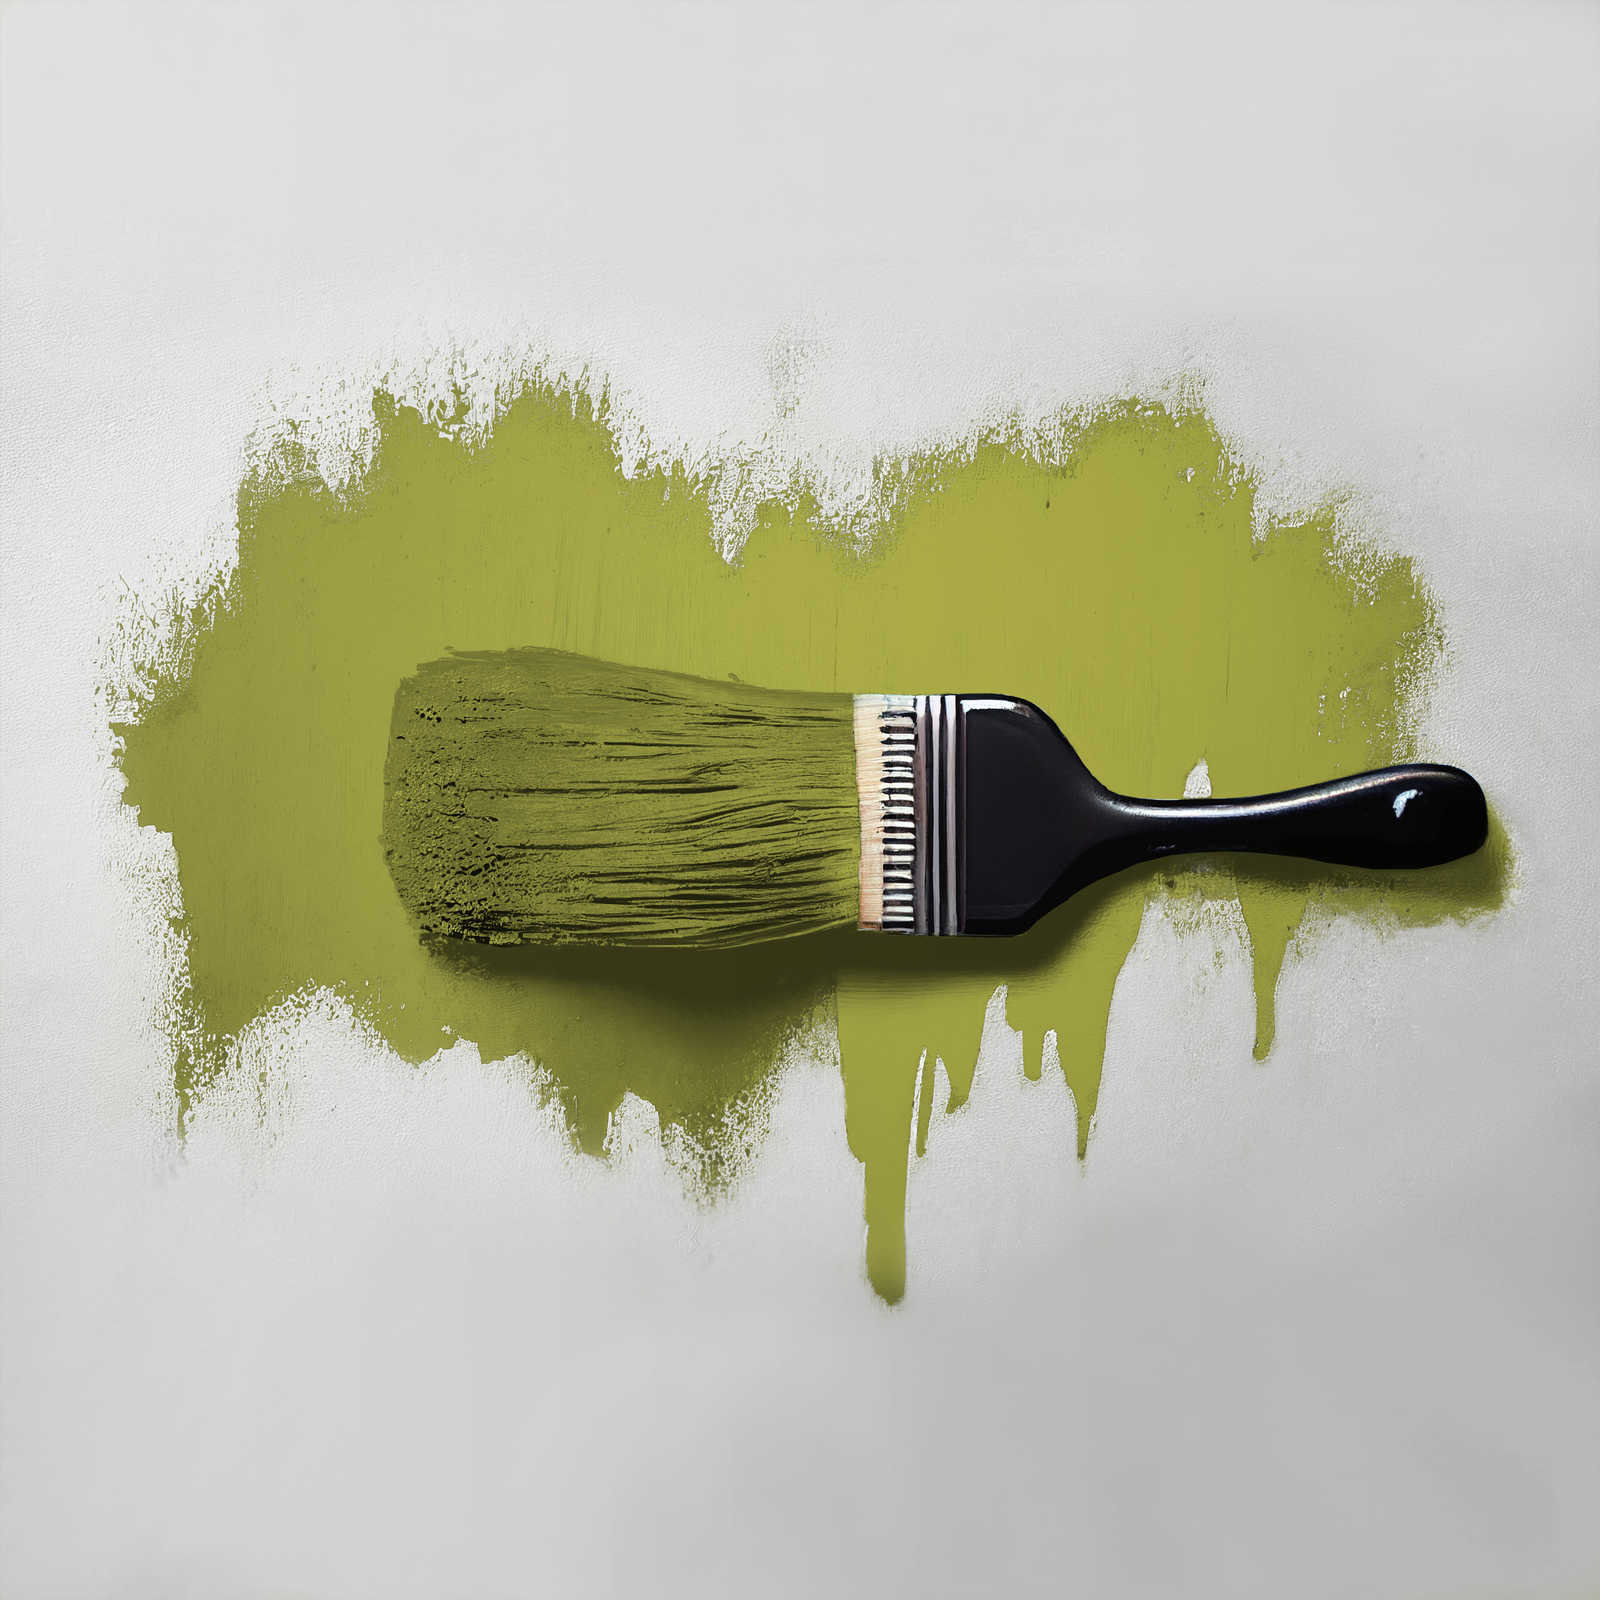             Peinture murale TCK4009 »Kitchy Kiwi« en vert jaune vif – 2,5 litres
        